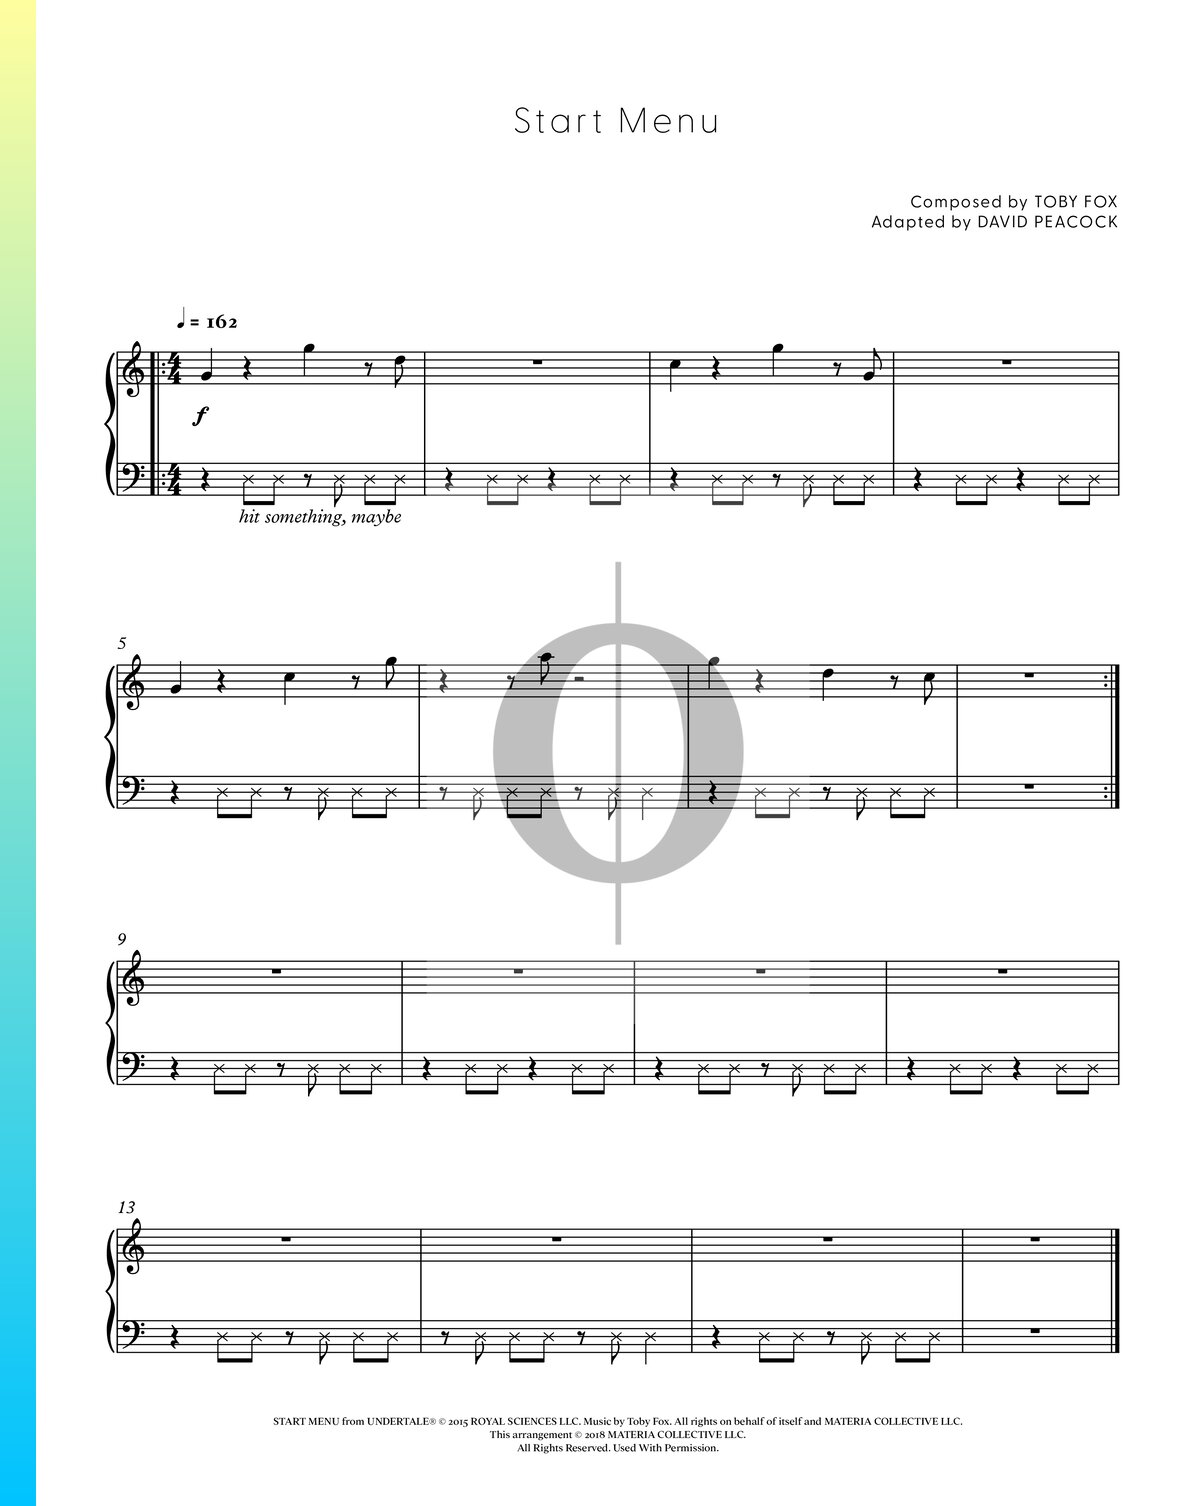 I.O - Lv.0 Sheet music for Piano (Solo)